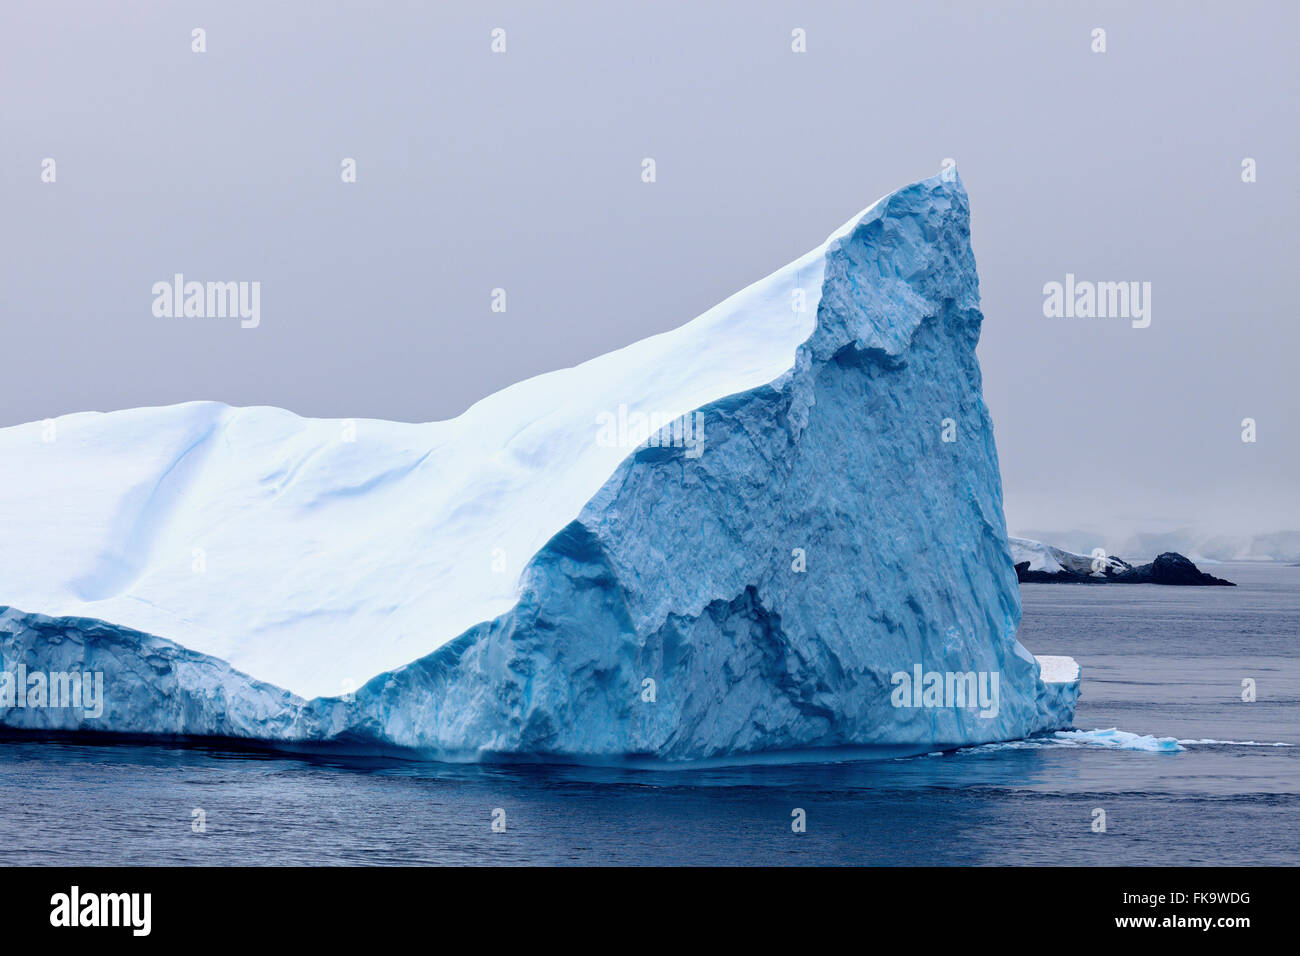 L'Antartide paesaggio - iceberg galleggianti in mare Foto Stock